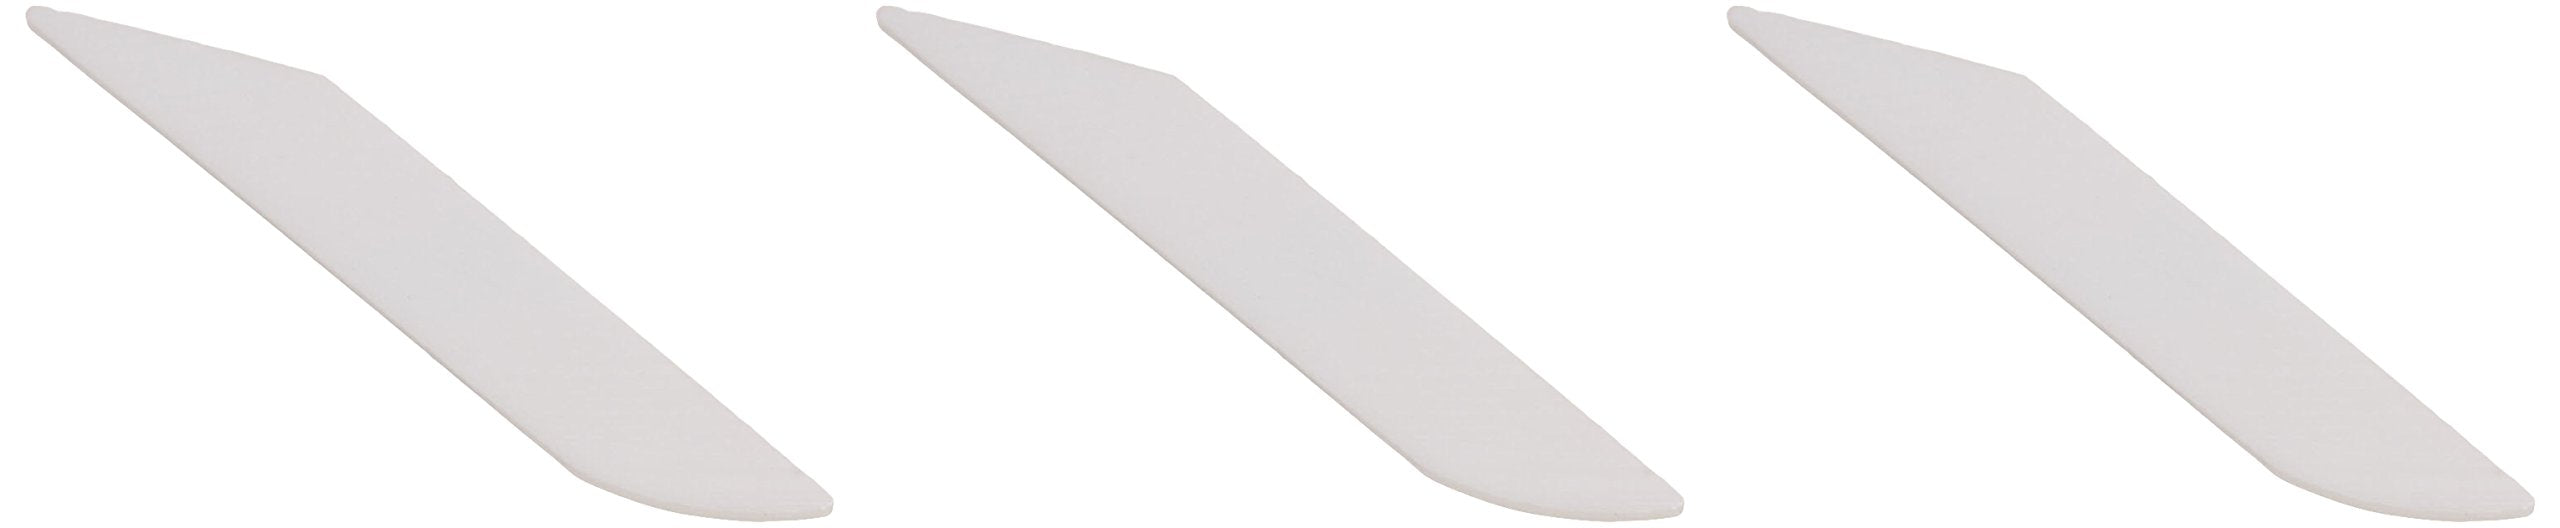 Gaianotes G-13 Spare Blade For Micro Ceramic Blade Hobby Tools Japanese Ceramic Blade